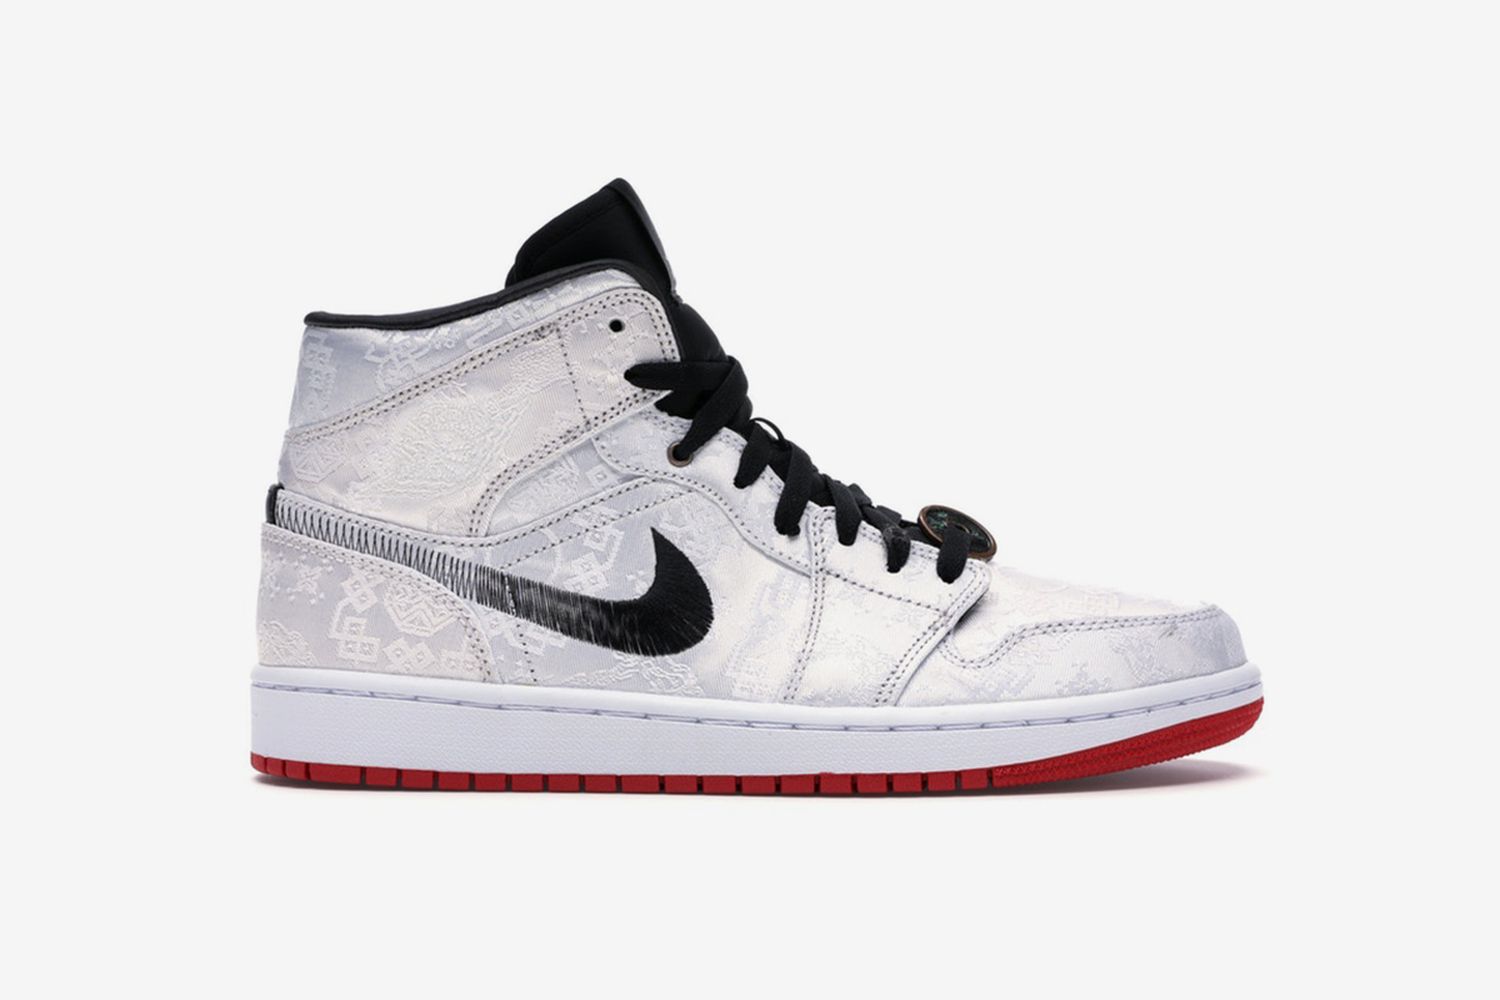 Shop the Latest CLOT x Nike Air Jordan 1 Sneaker at StockX